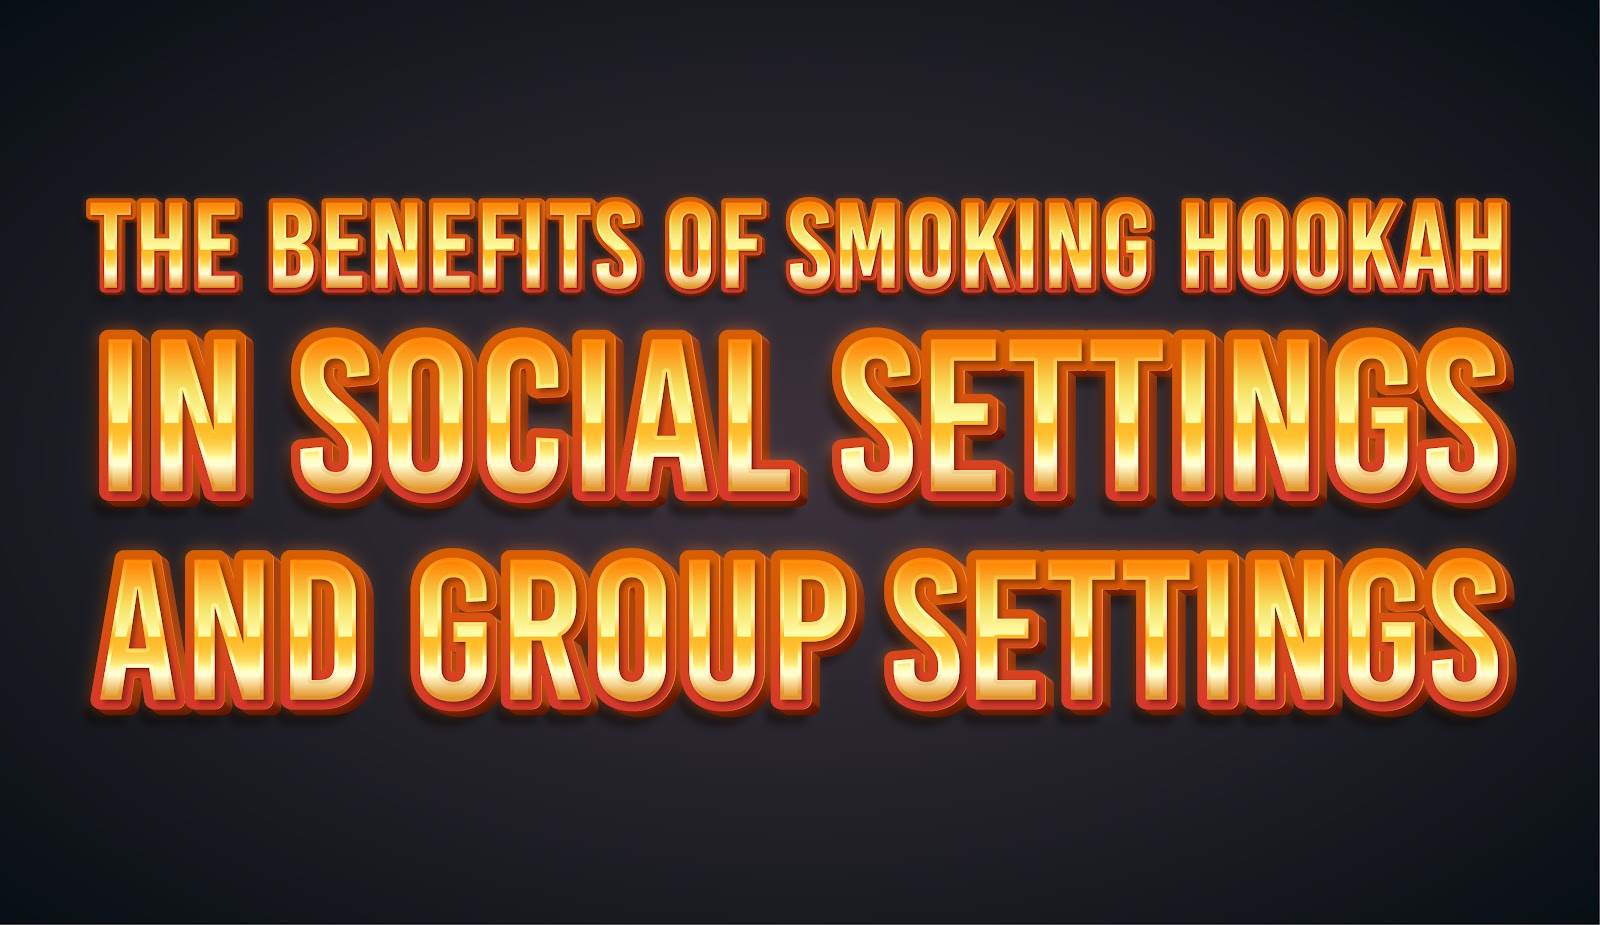 The Benefits of Smoking Hookah in Groups or Social Settings